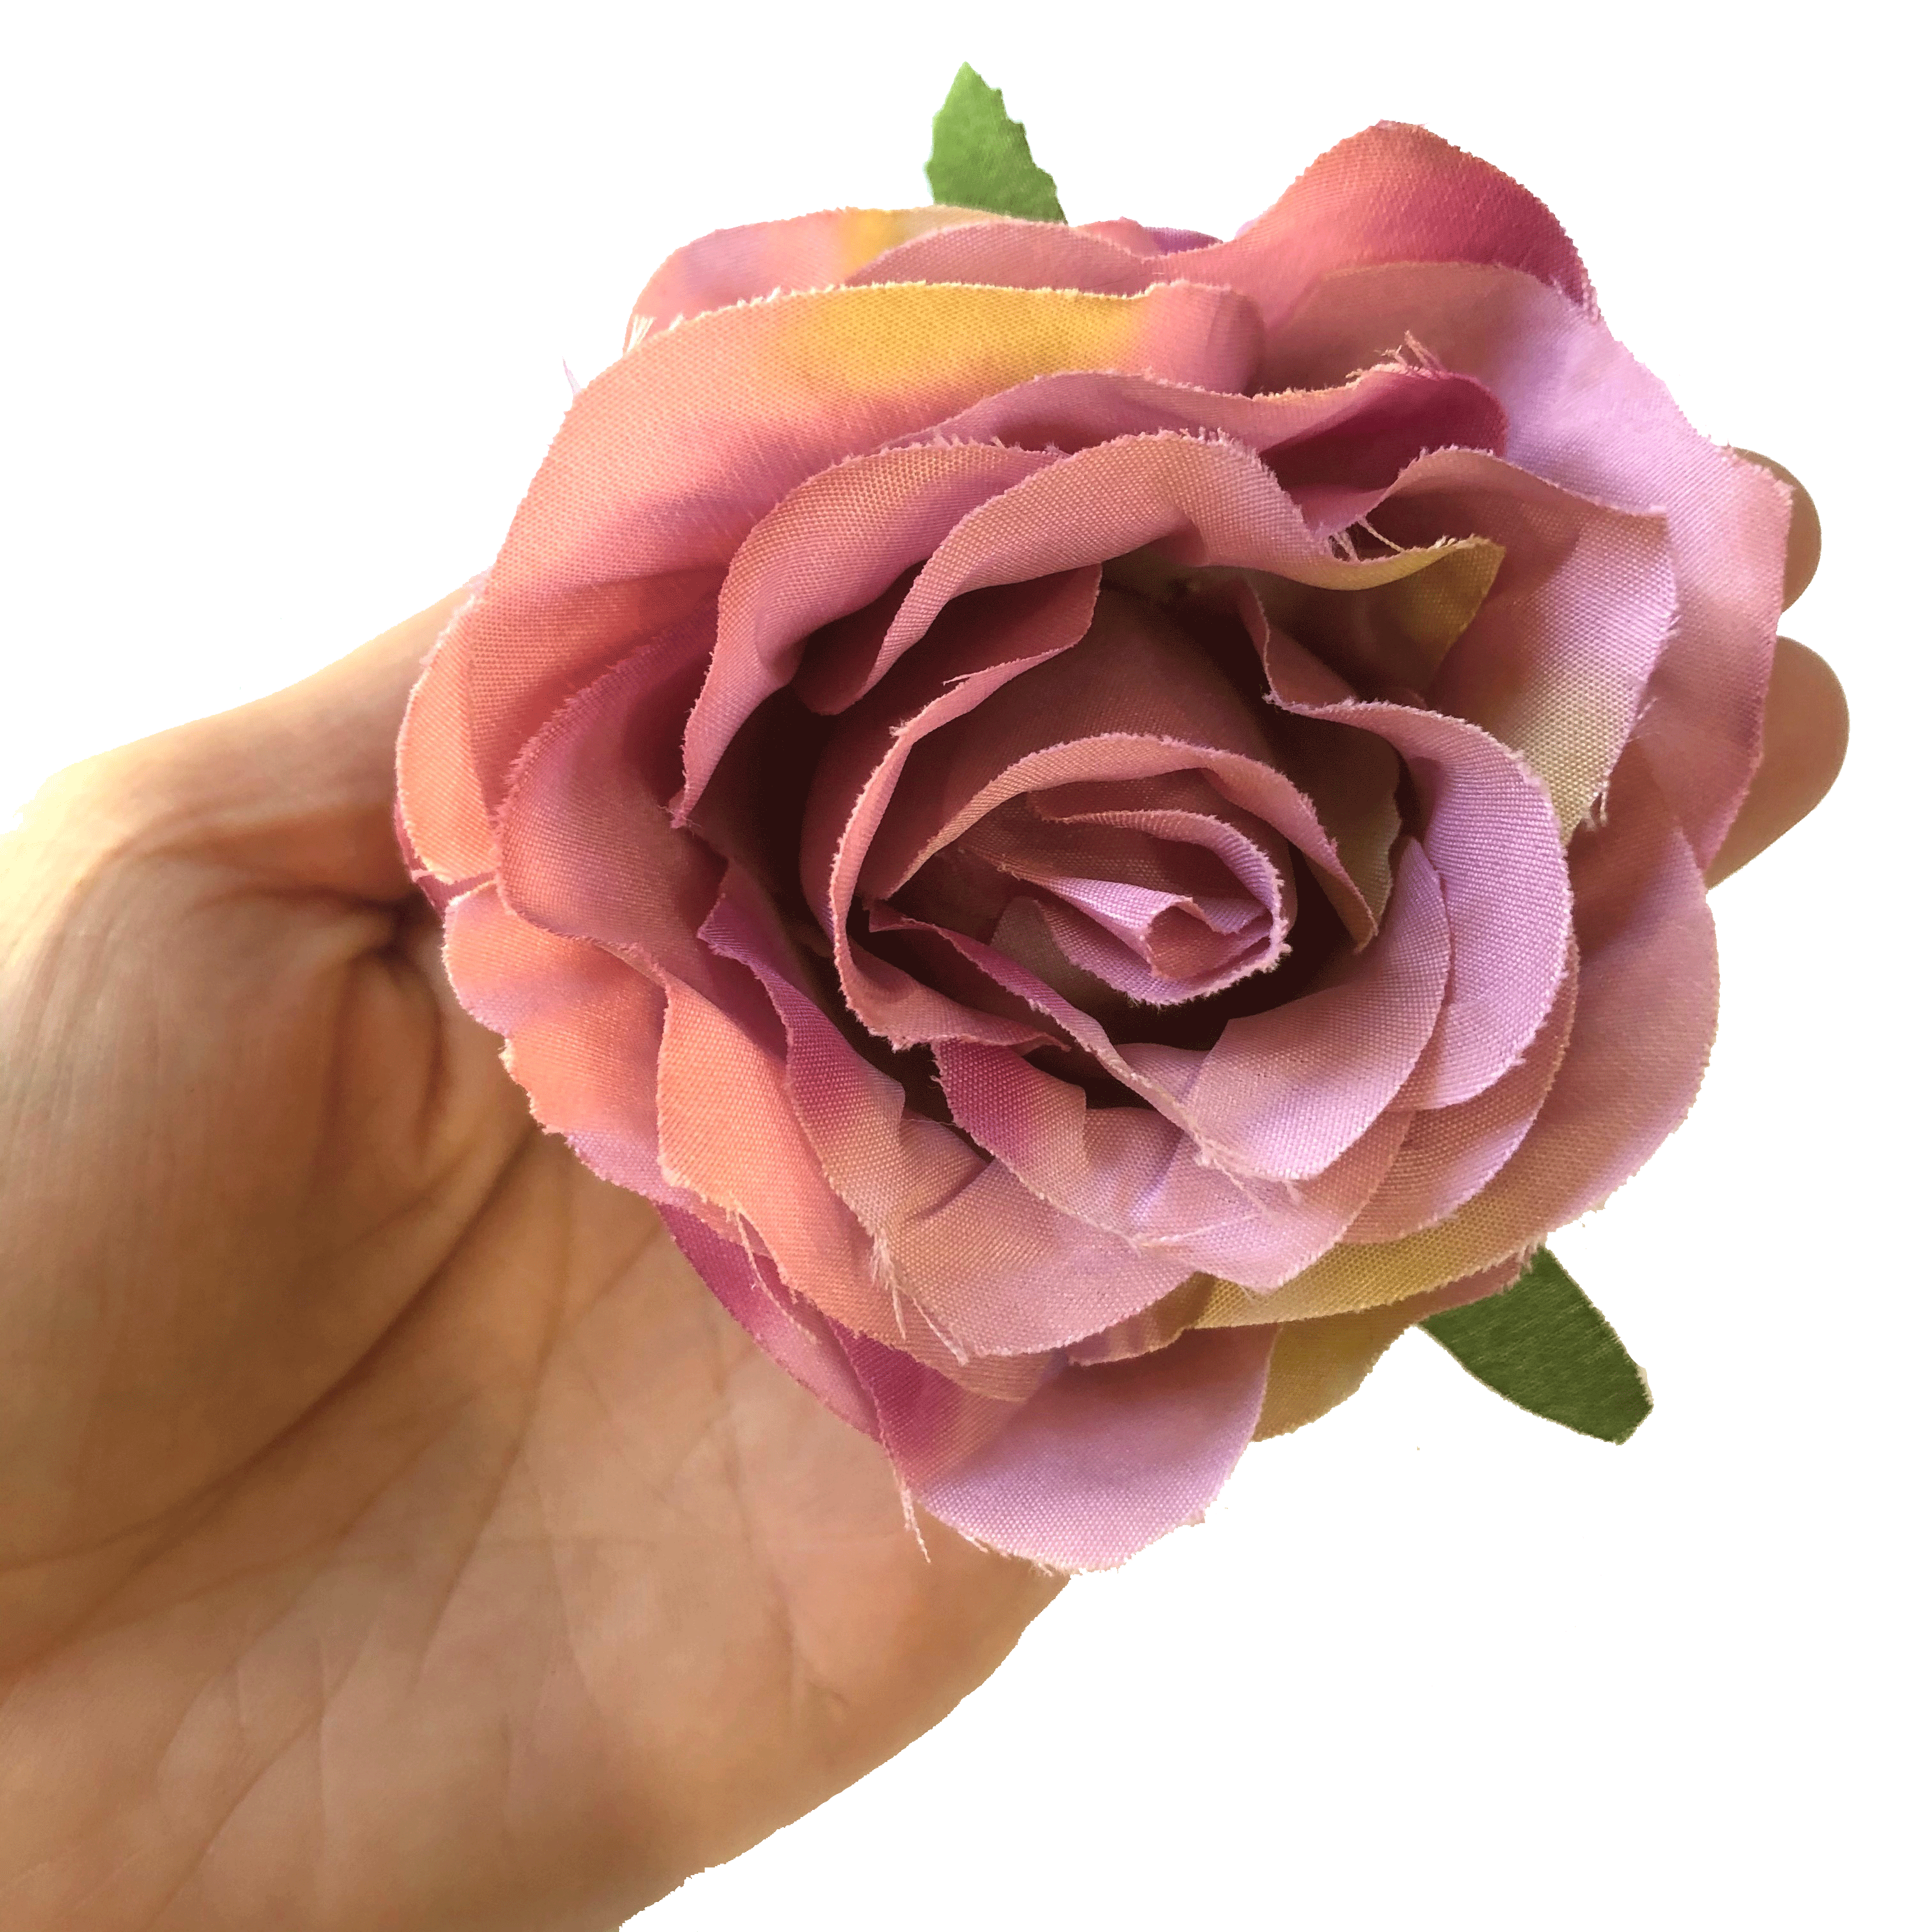 Artificial Silk Flower Head - Vintage Mauve Rose Style 22 - 1pc